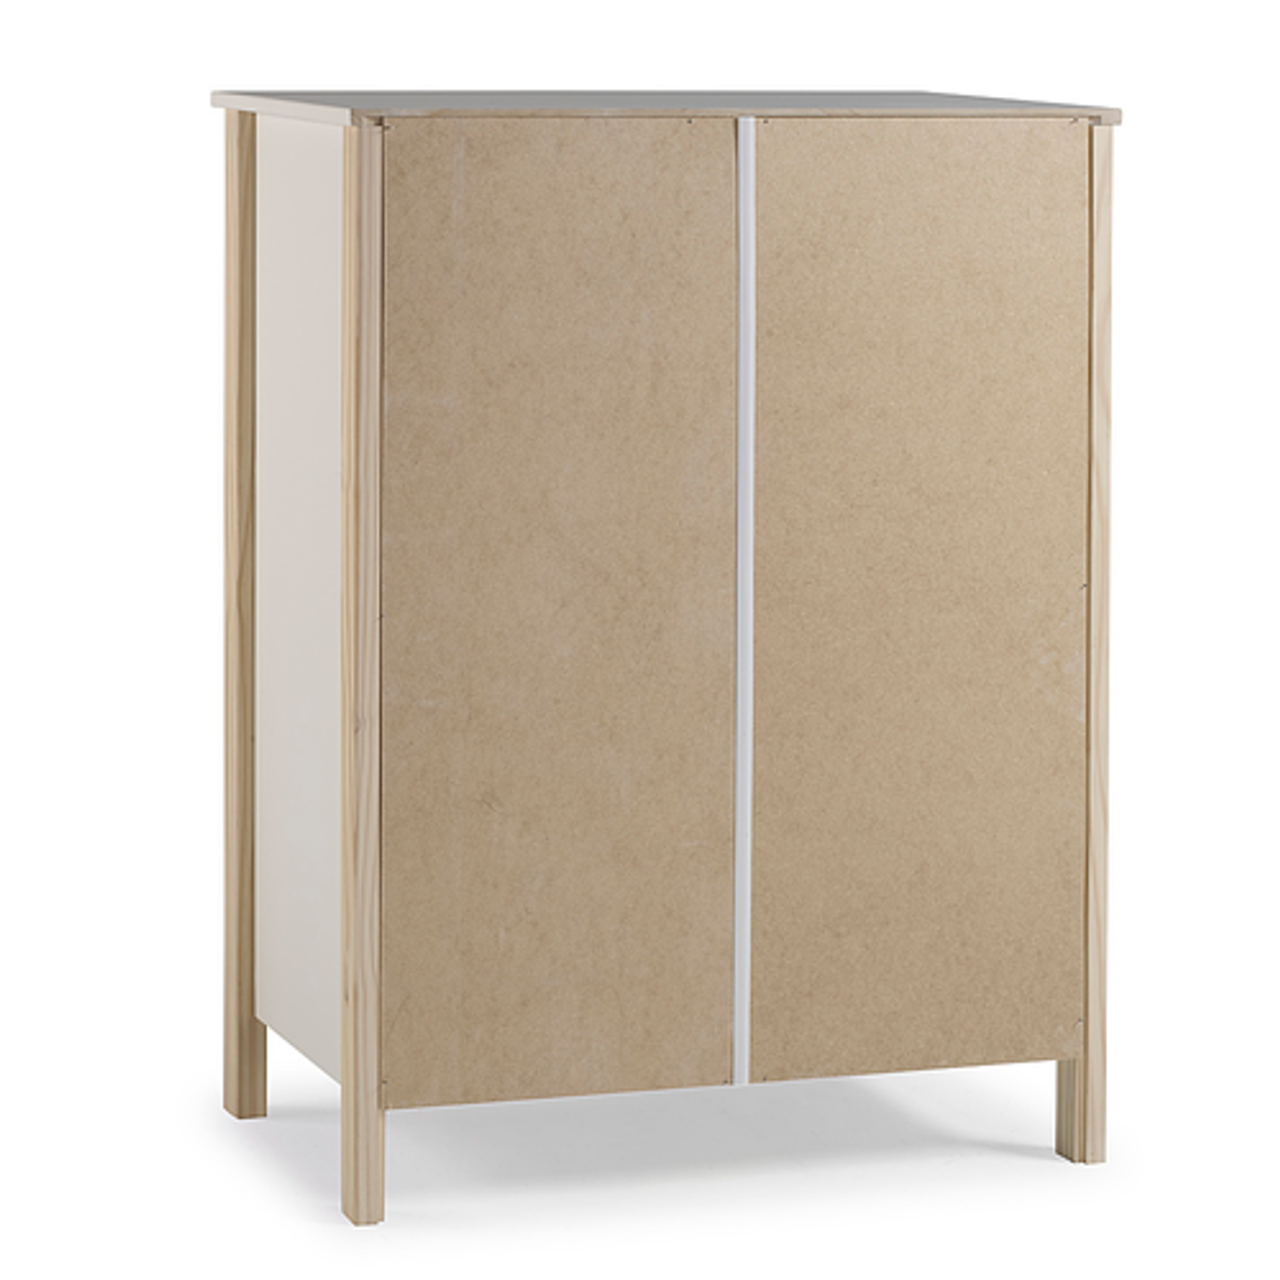 Linon Home Décor - Kessler Bookcase - White and Natural